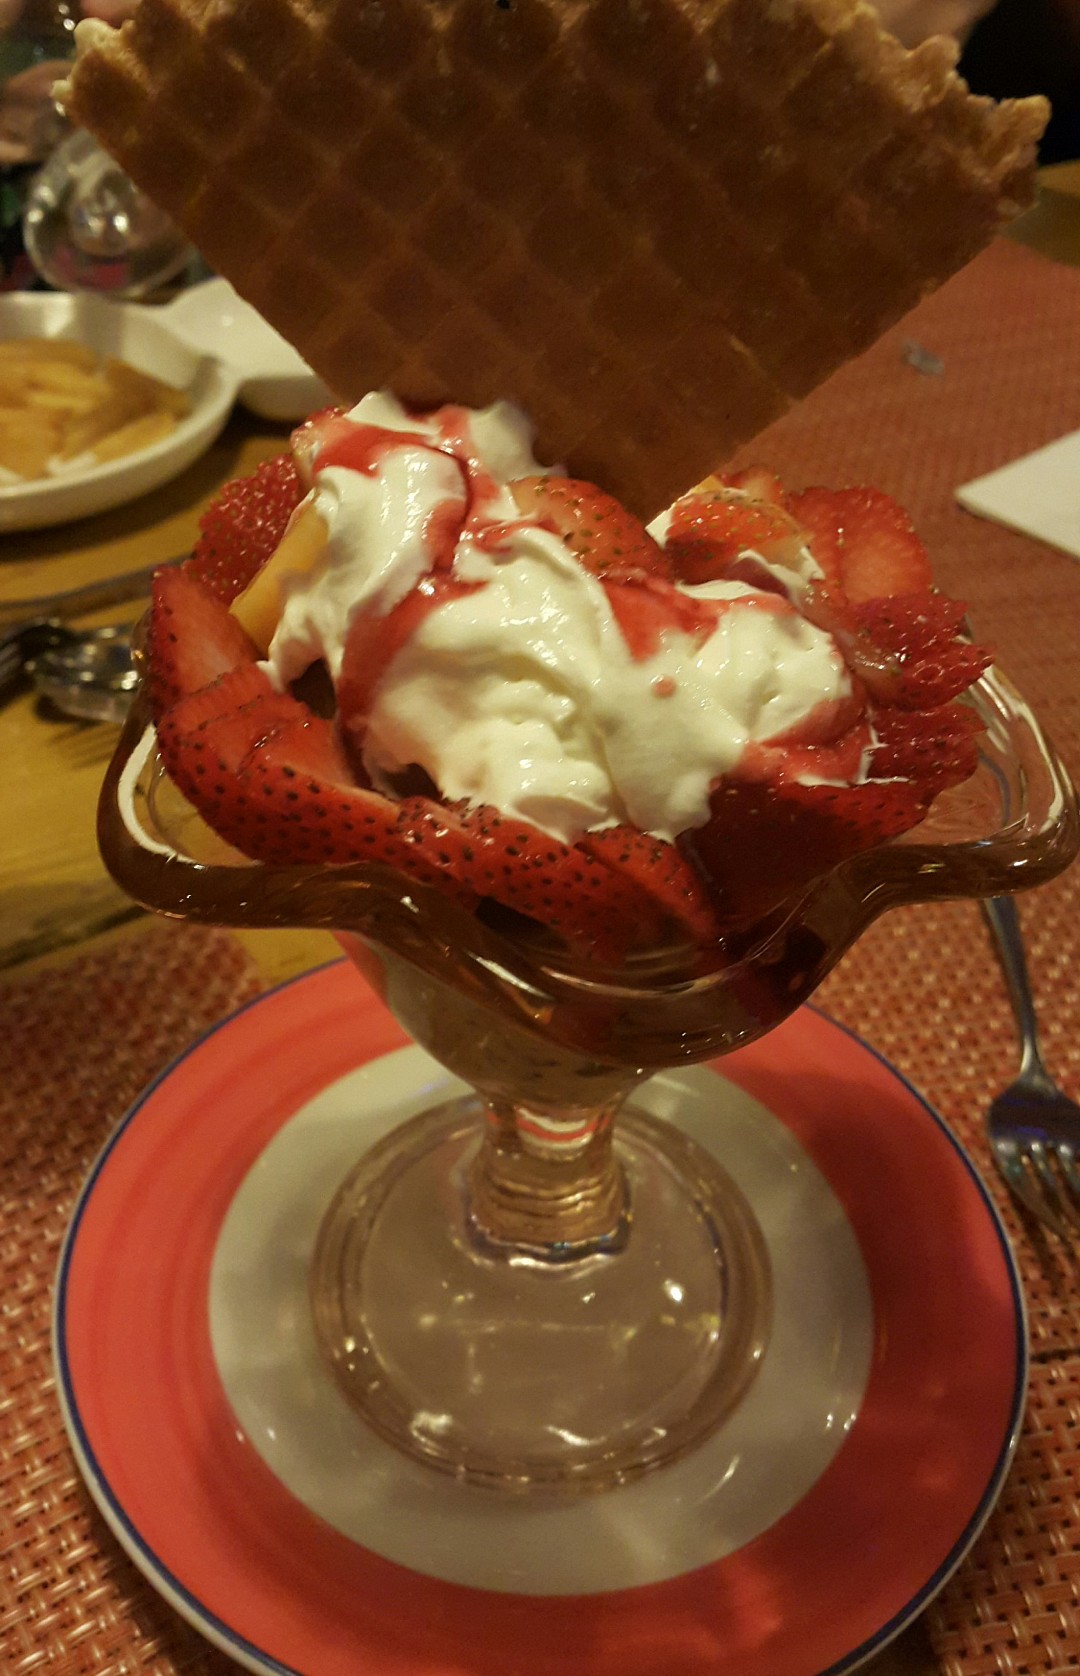 Valentino 😅
Its Scoop of #chocolate #icecream + #strawberry pieces + dream whip cream @ Veranda Cafe - Bahrain